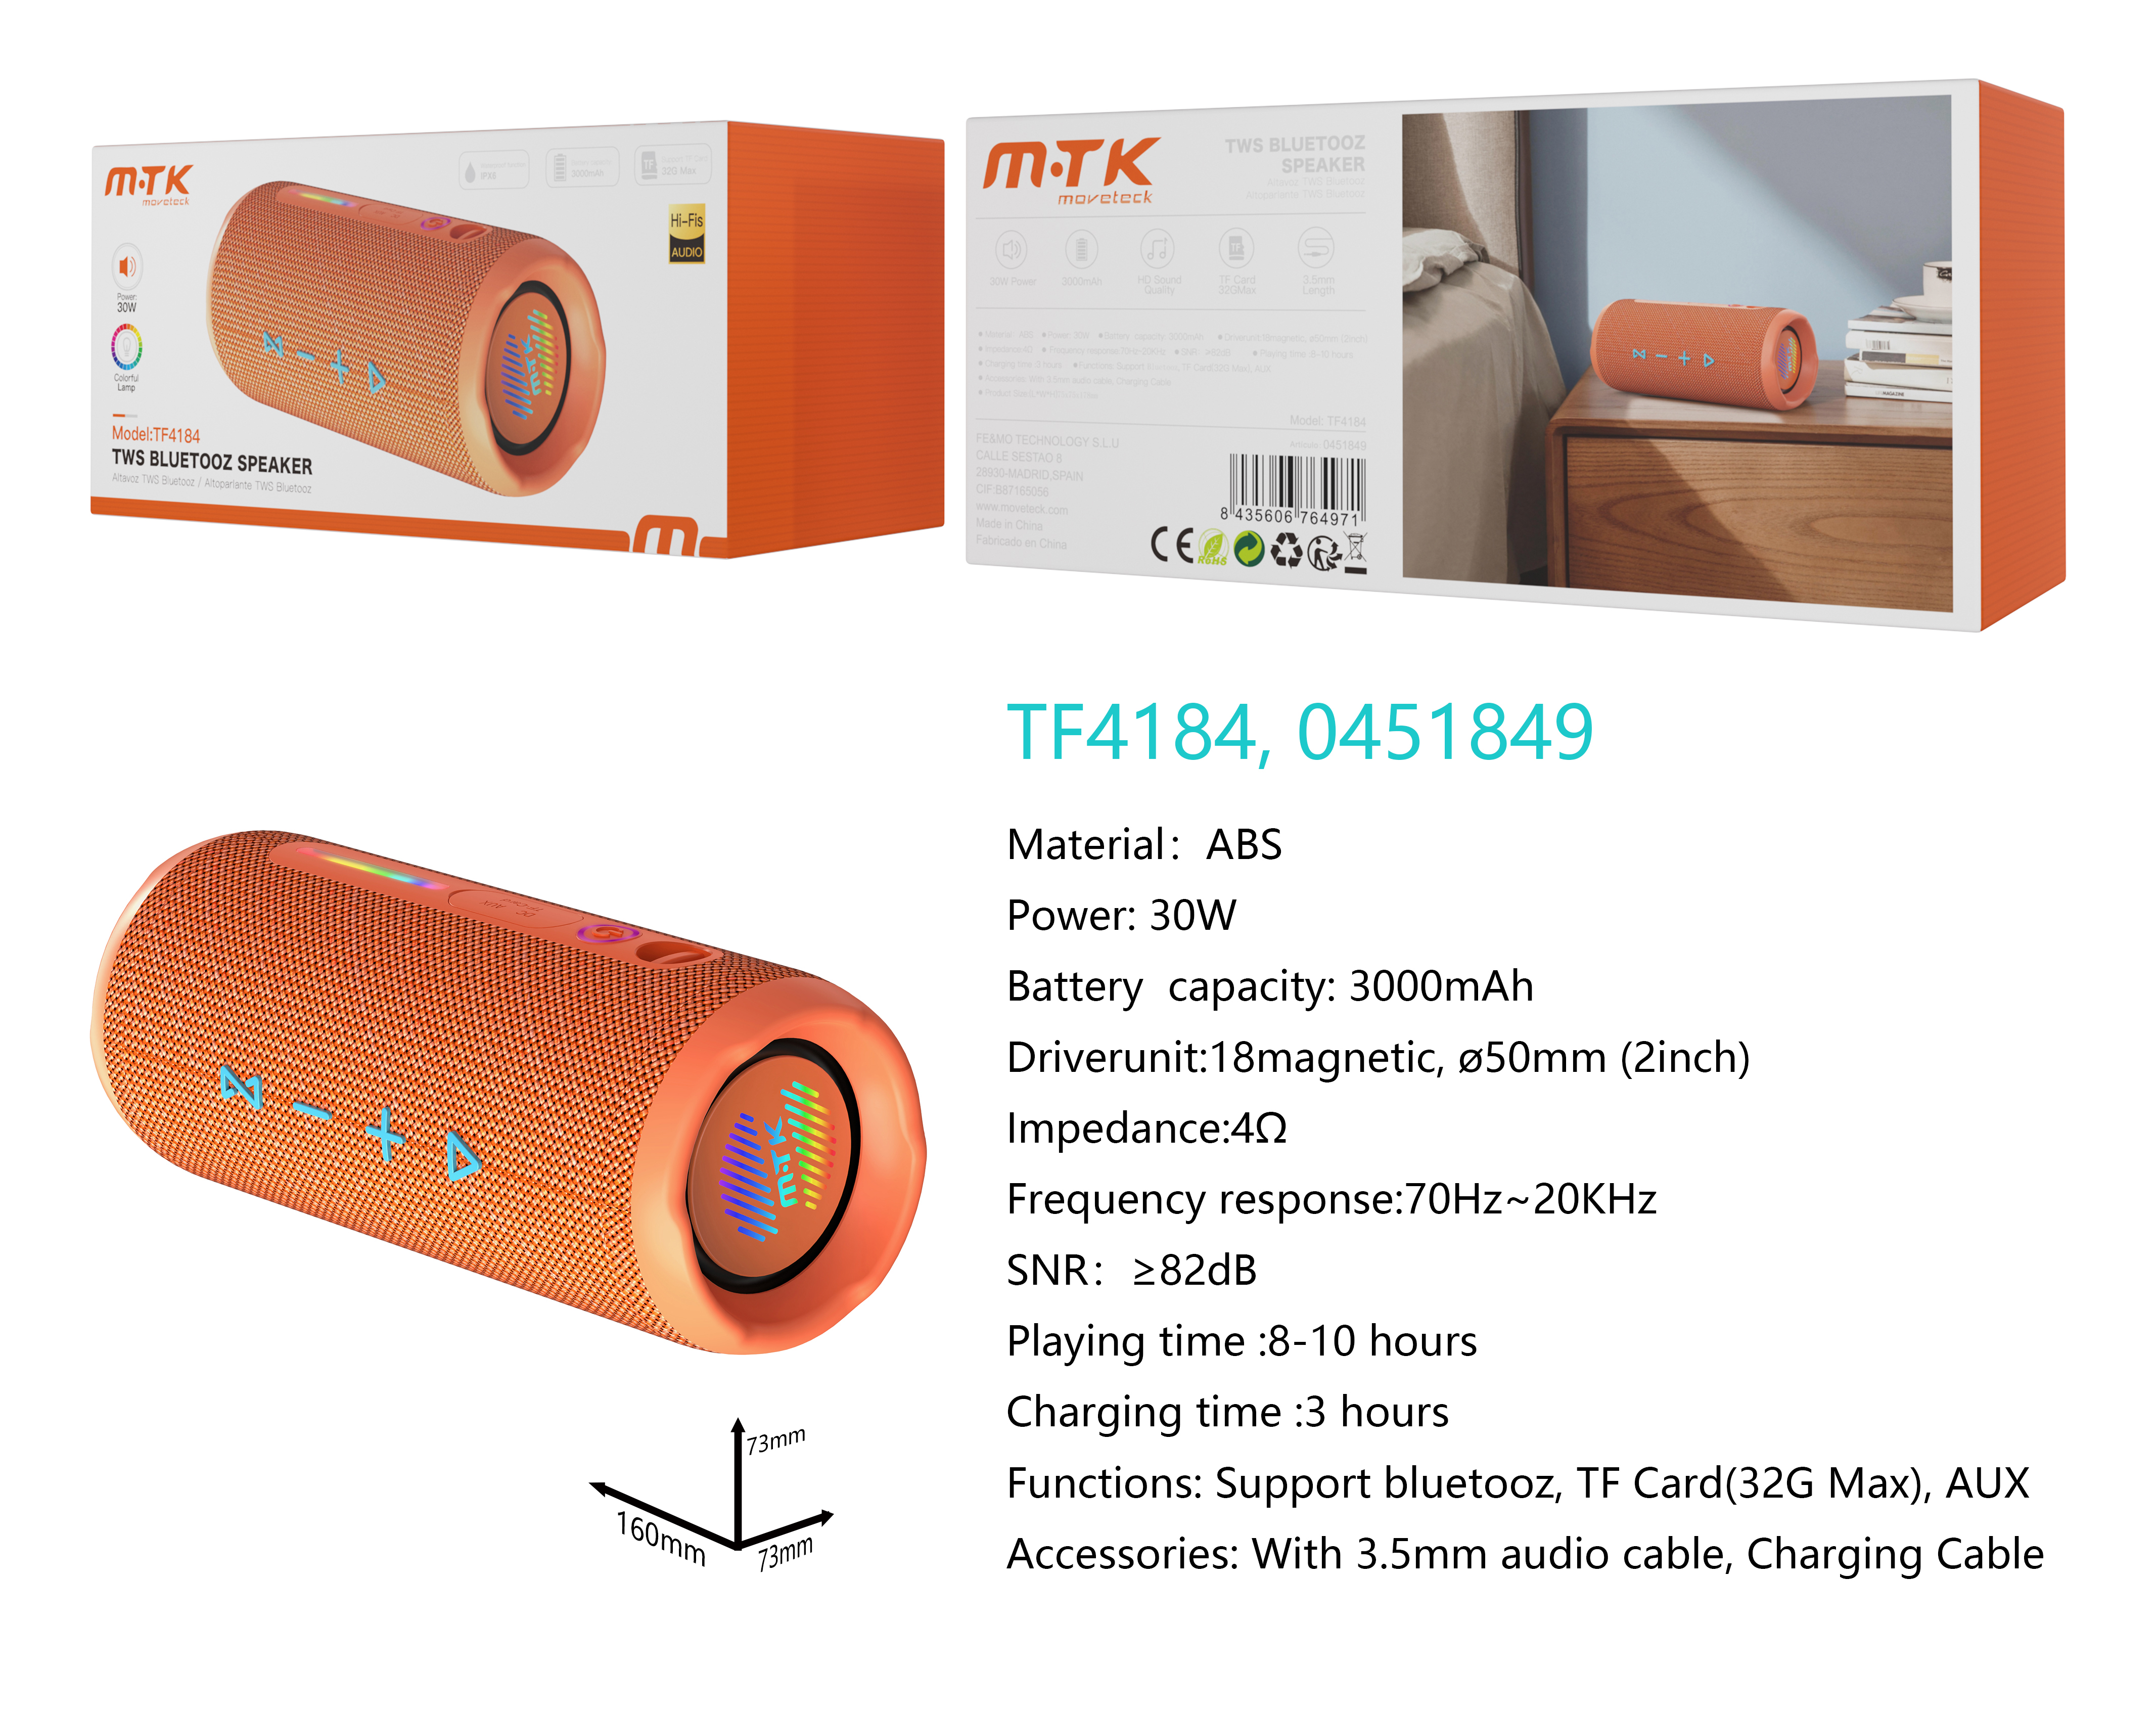 TF4184 NR Luxury Altavoz TWS HIFI con Bluetooth, Luz RGB , Soporta AUX/TF(32G Max), 30W, Bateria 300